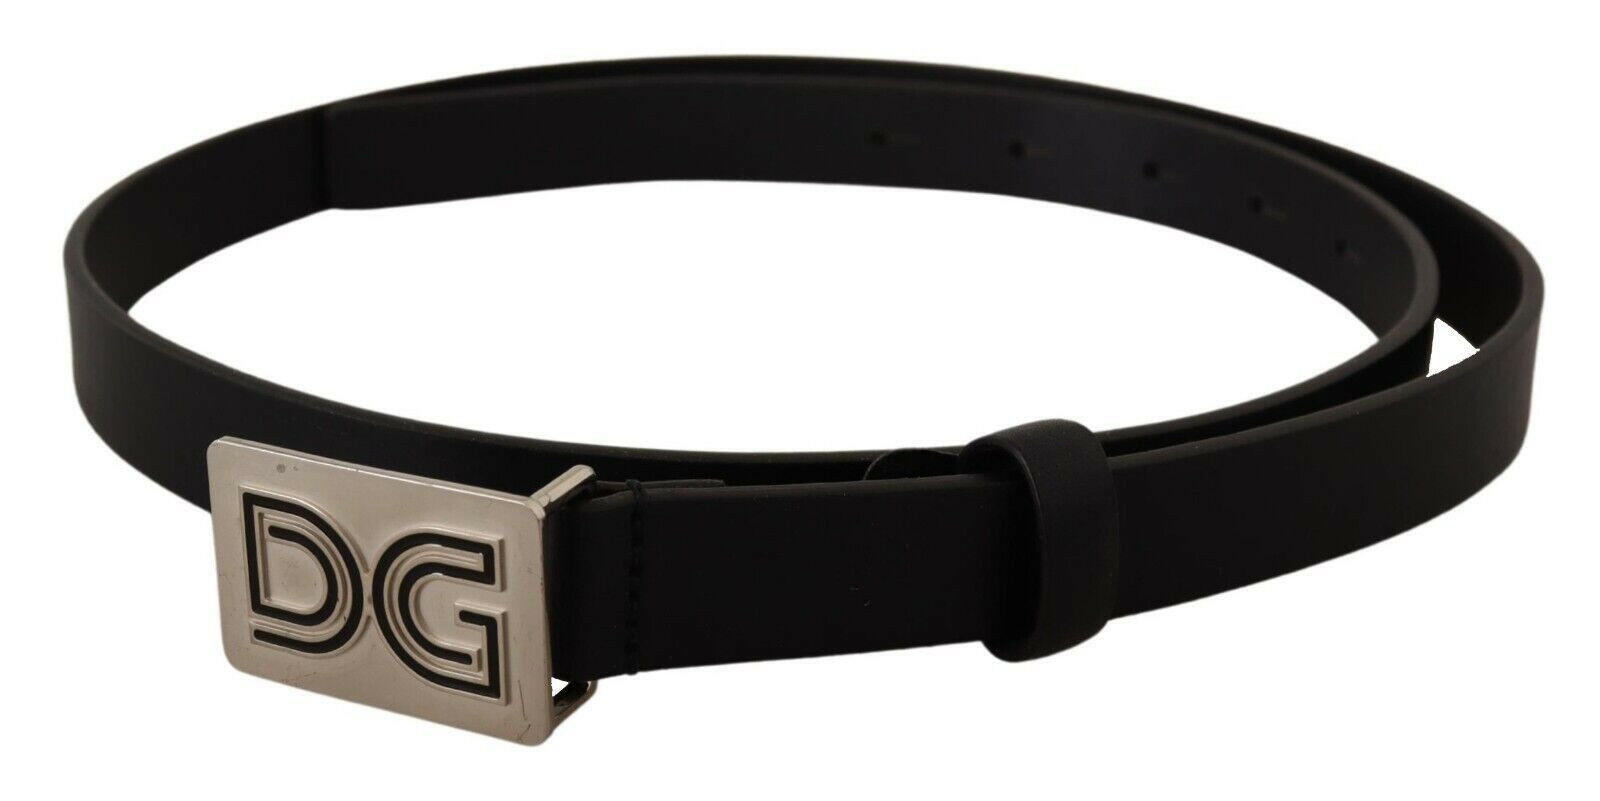 Dolce&Gabbana Men's DG-Logo Leather Buckle Belt